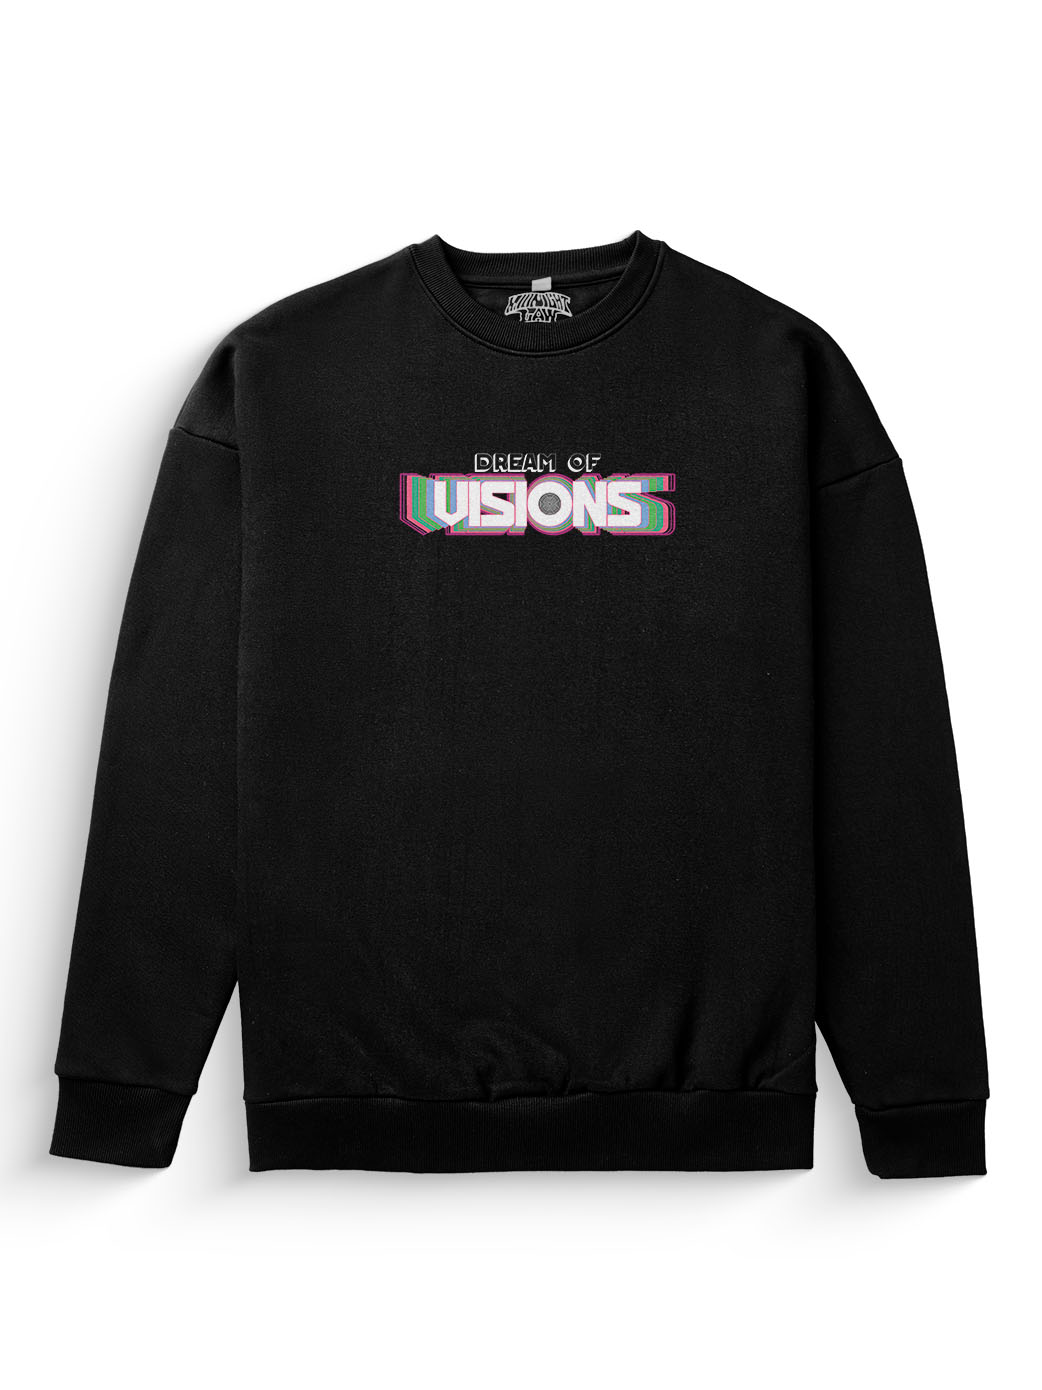 Visions Sweatshirt